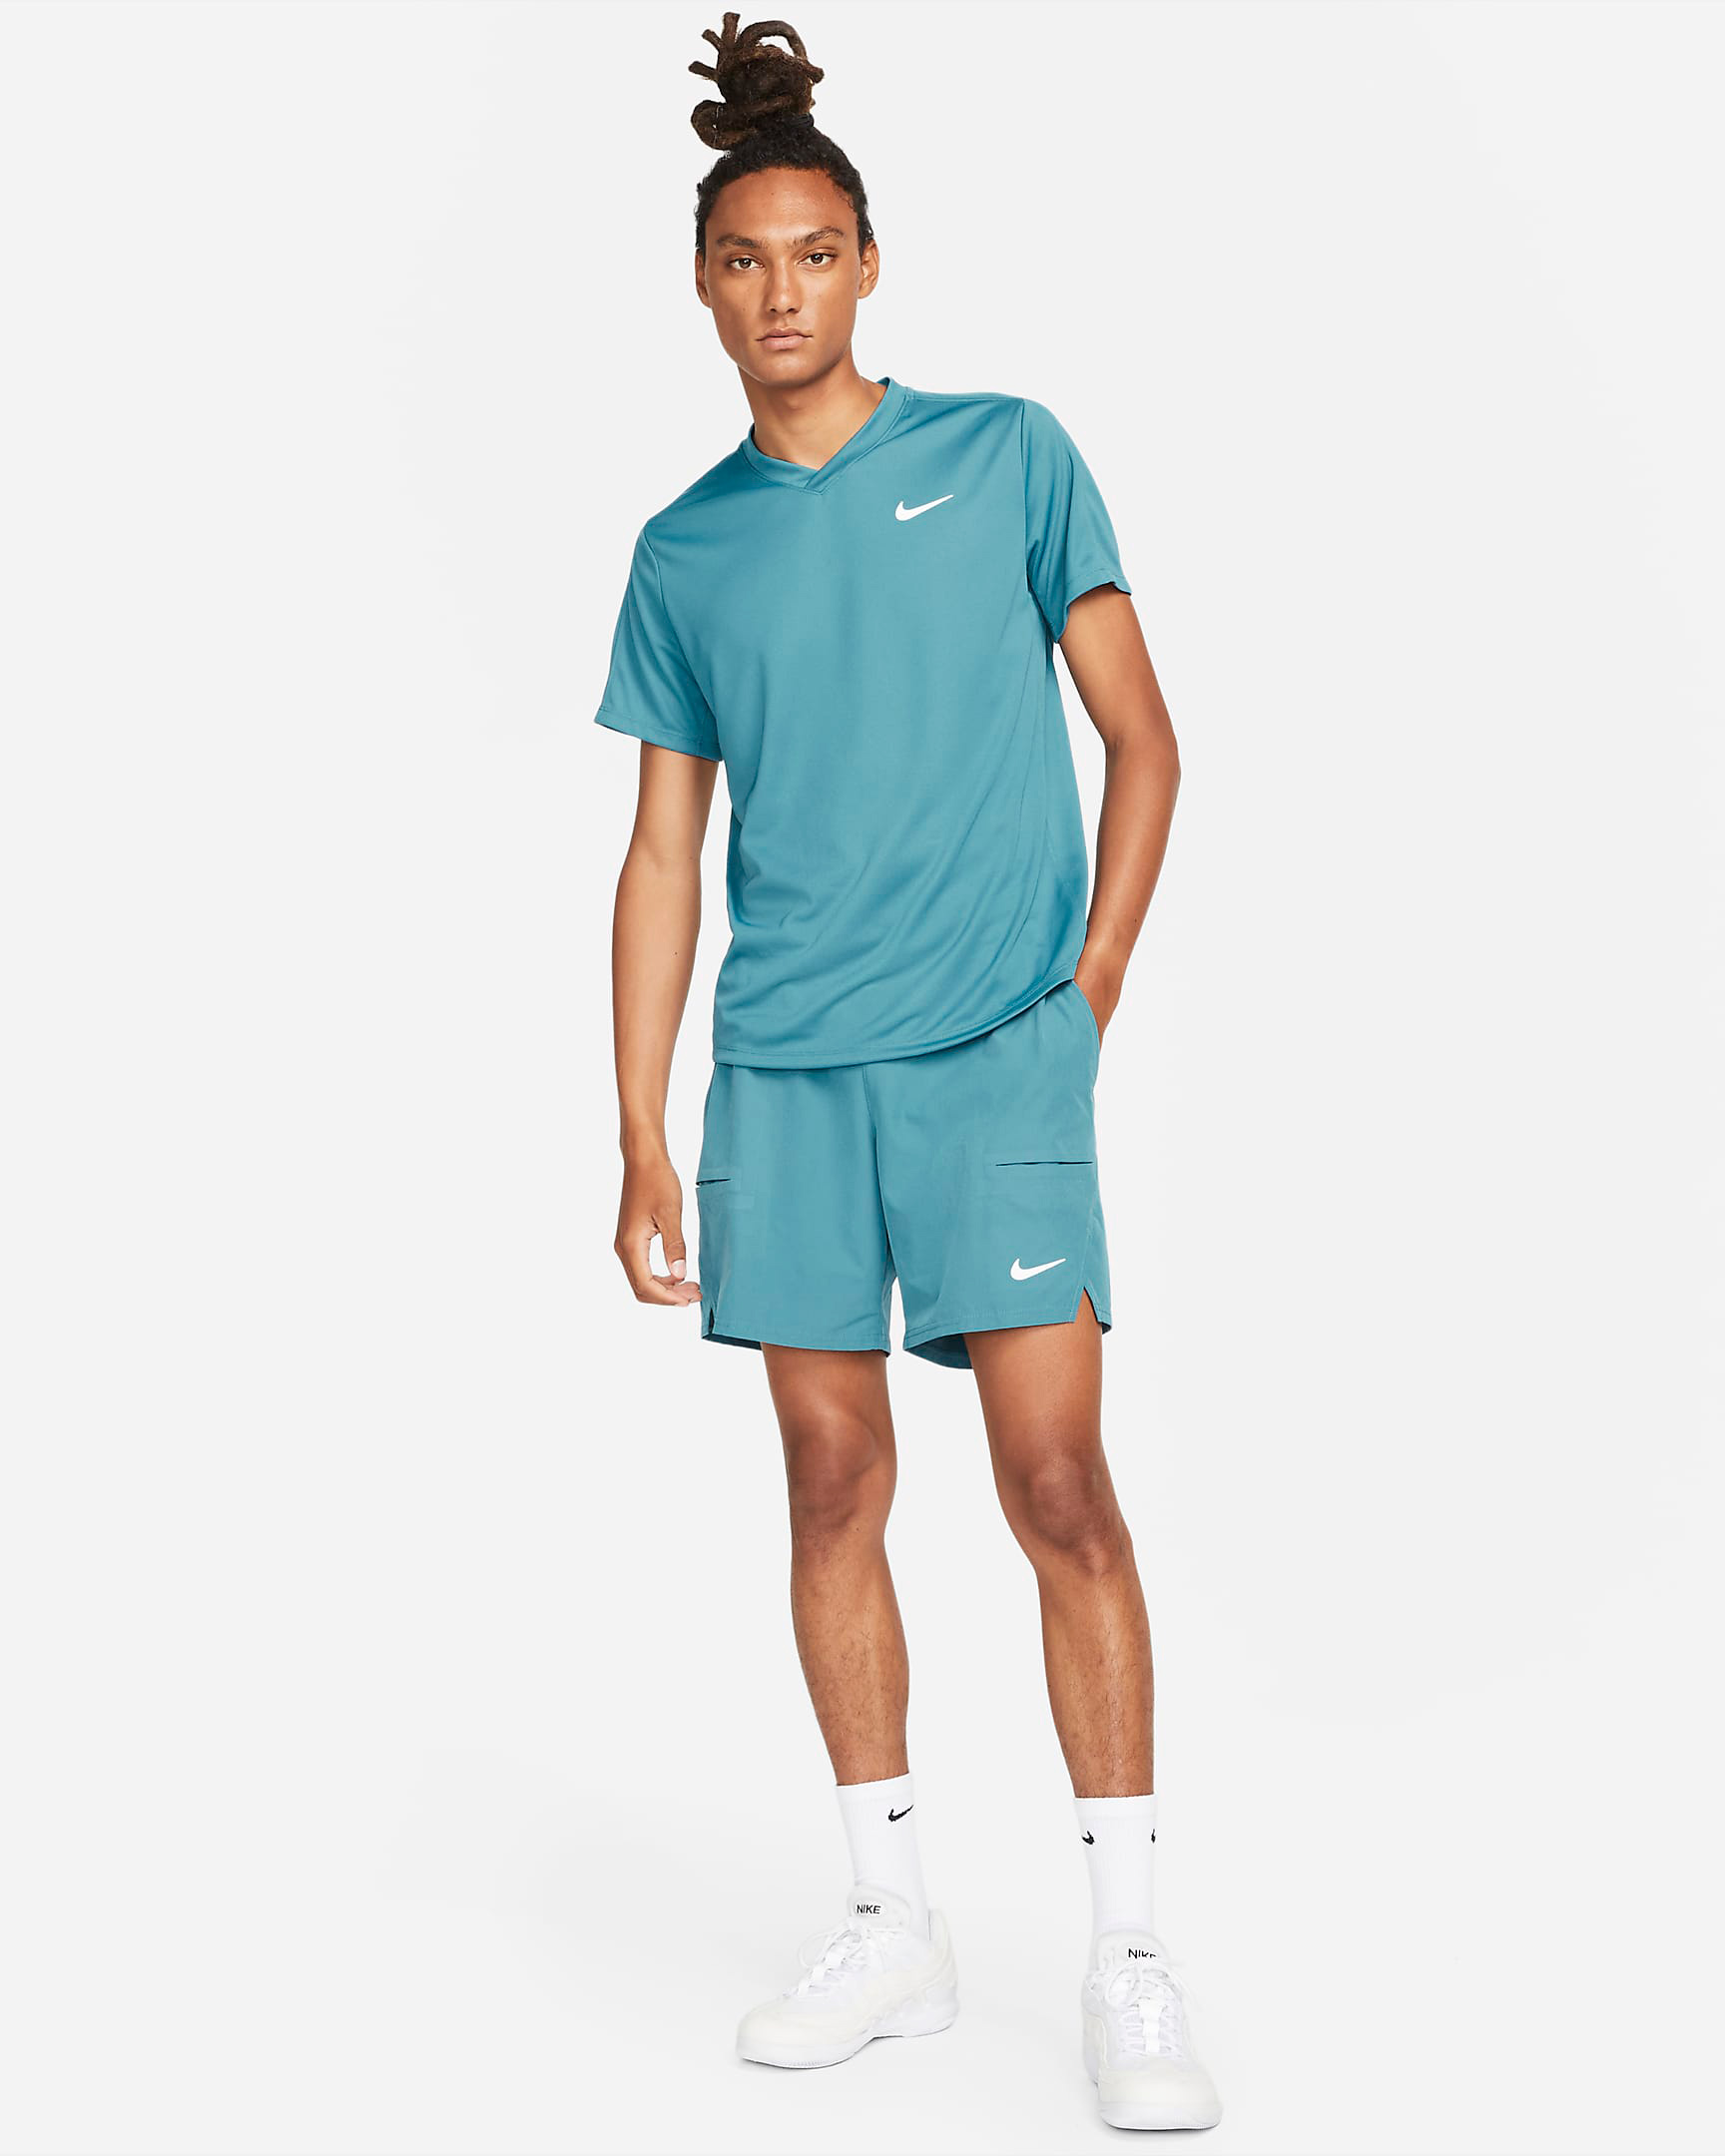 nike-rift-blue-tennis-shirt-shorts-outfit